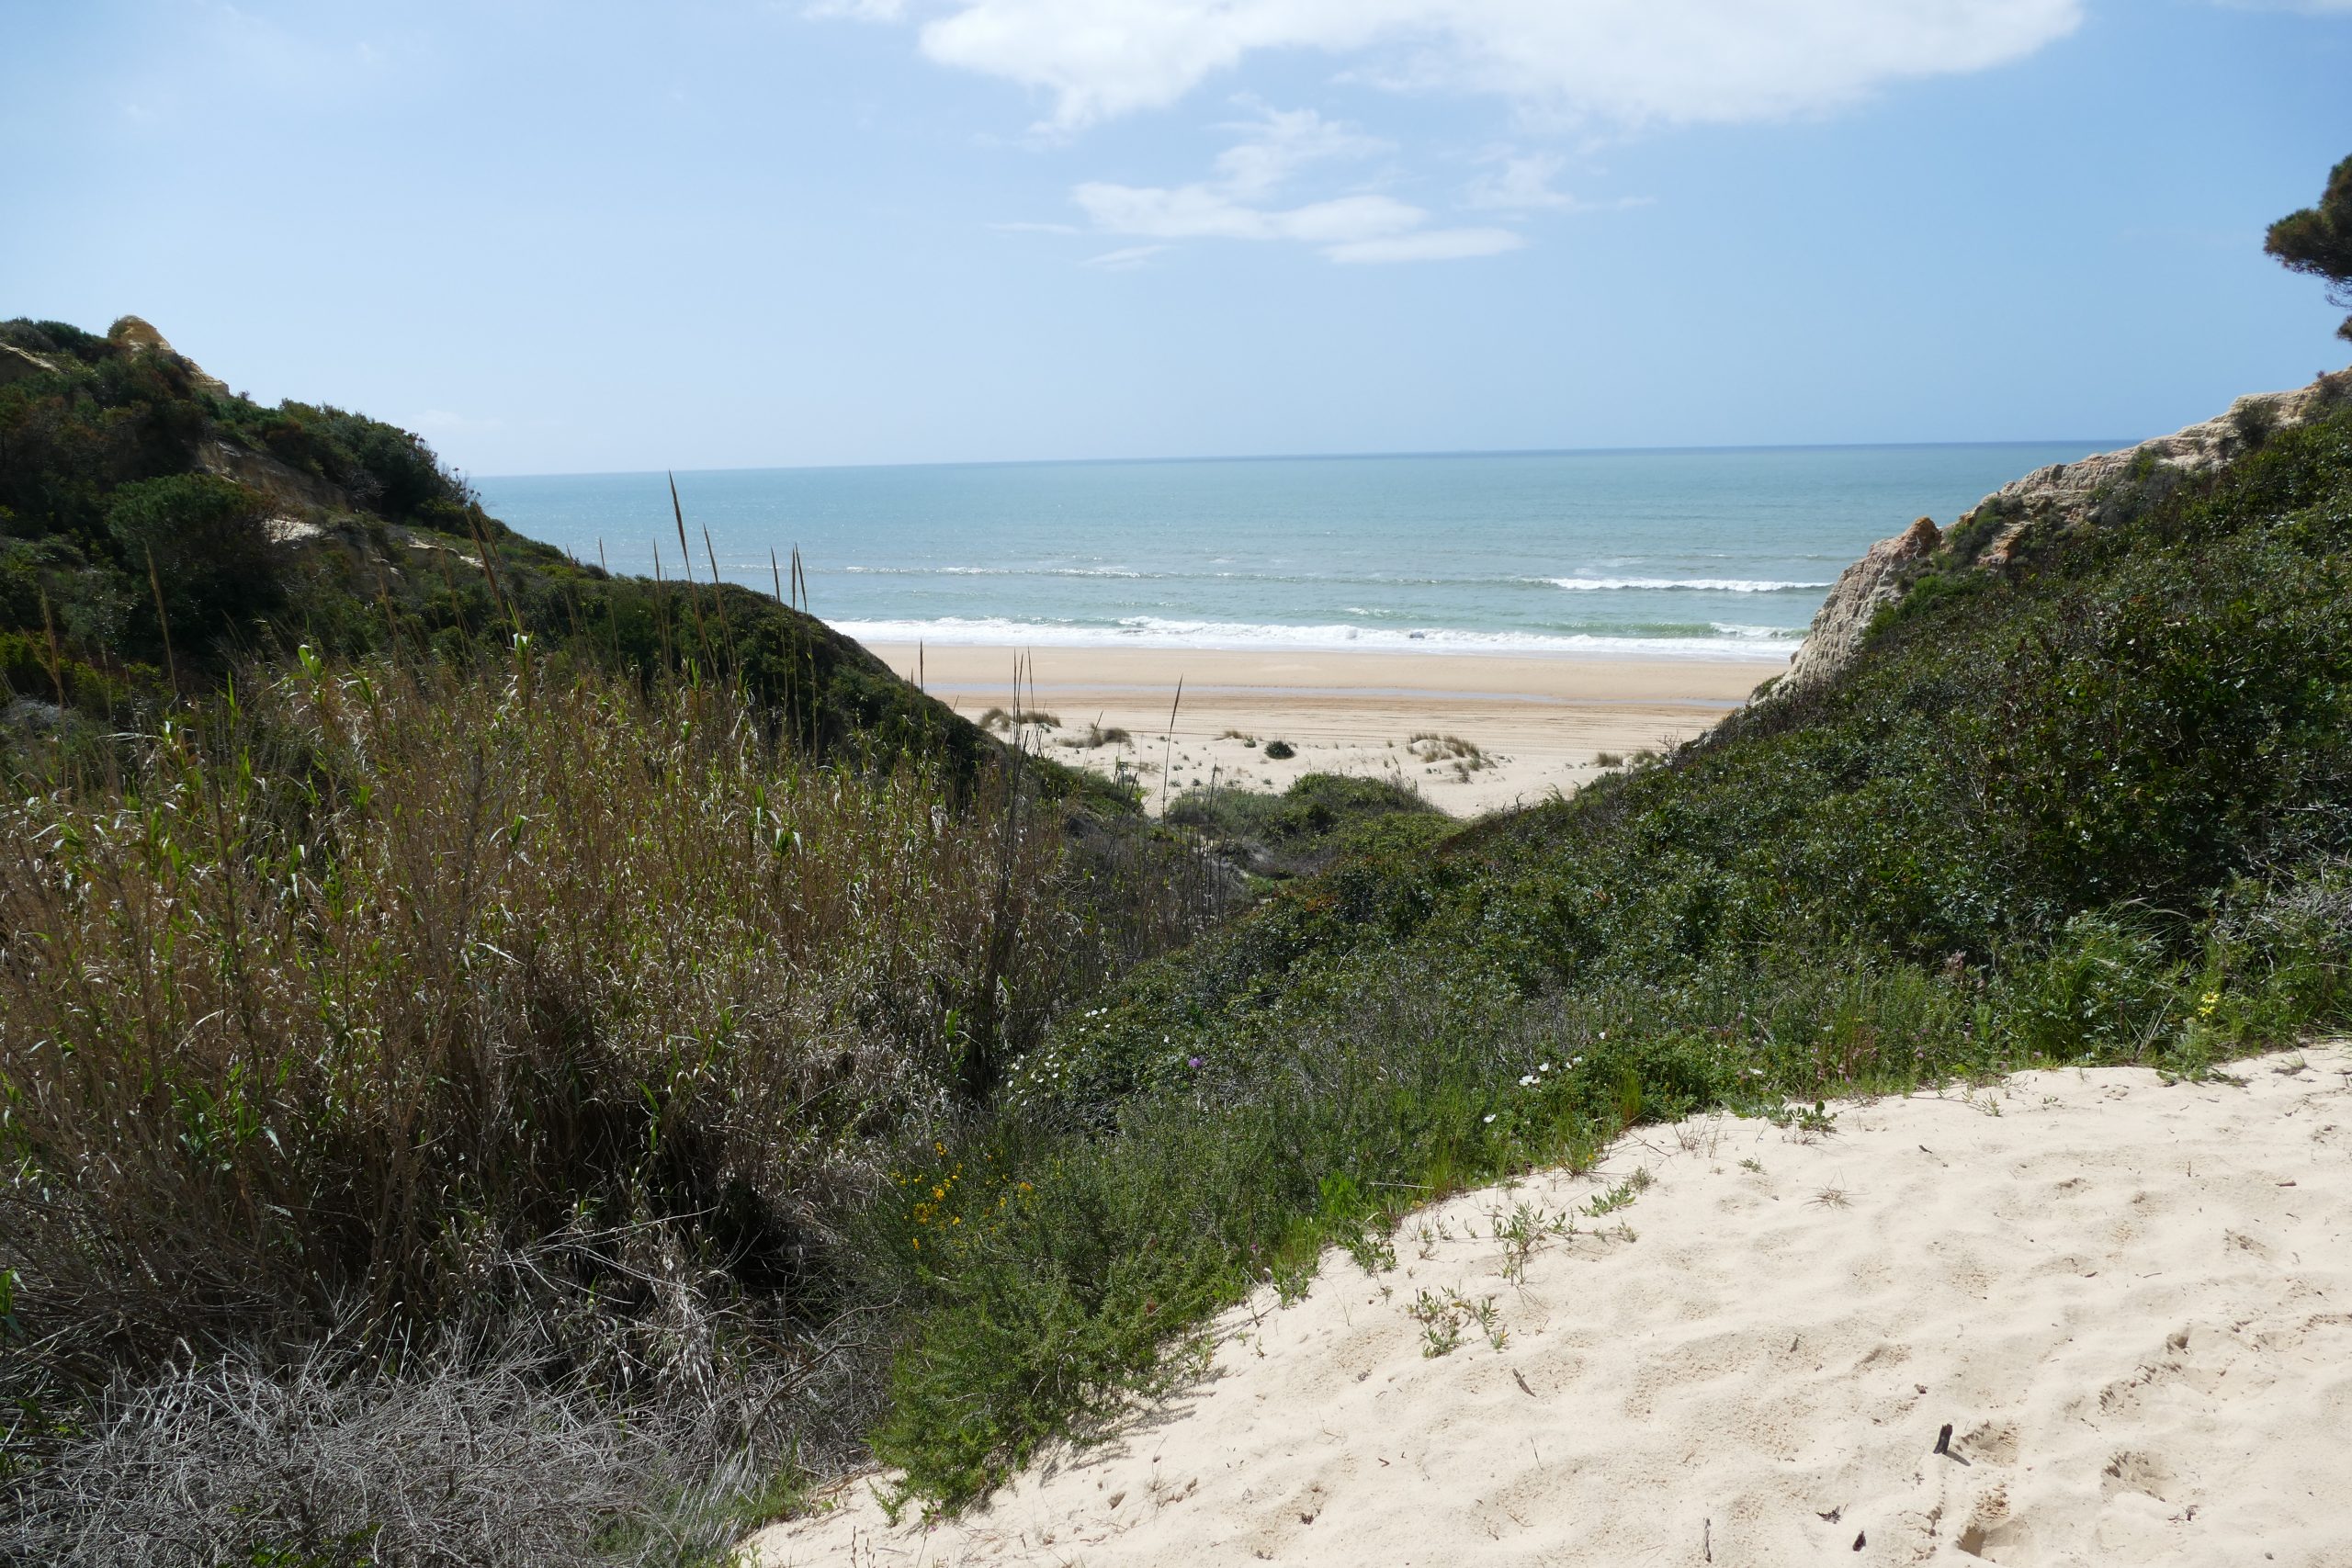 Doñana occidentale: littoral et dunes dans les terres